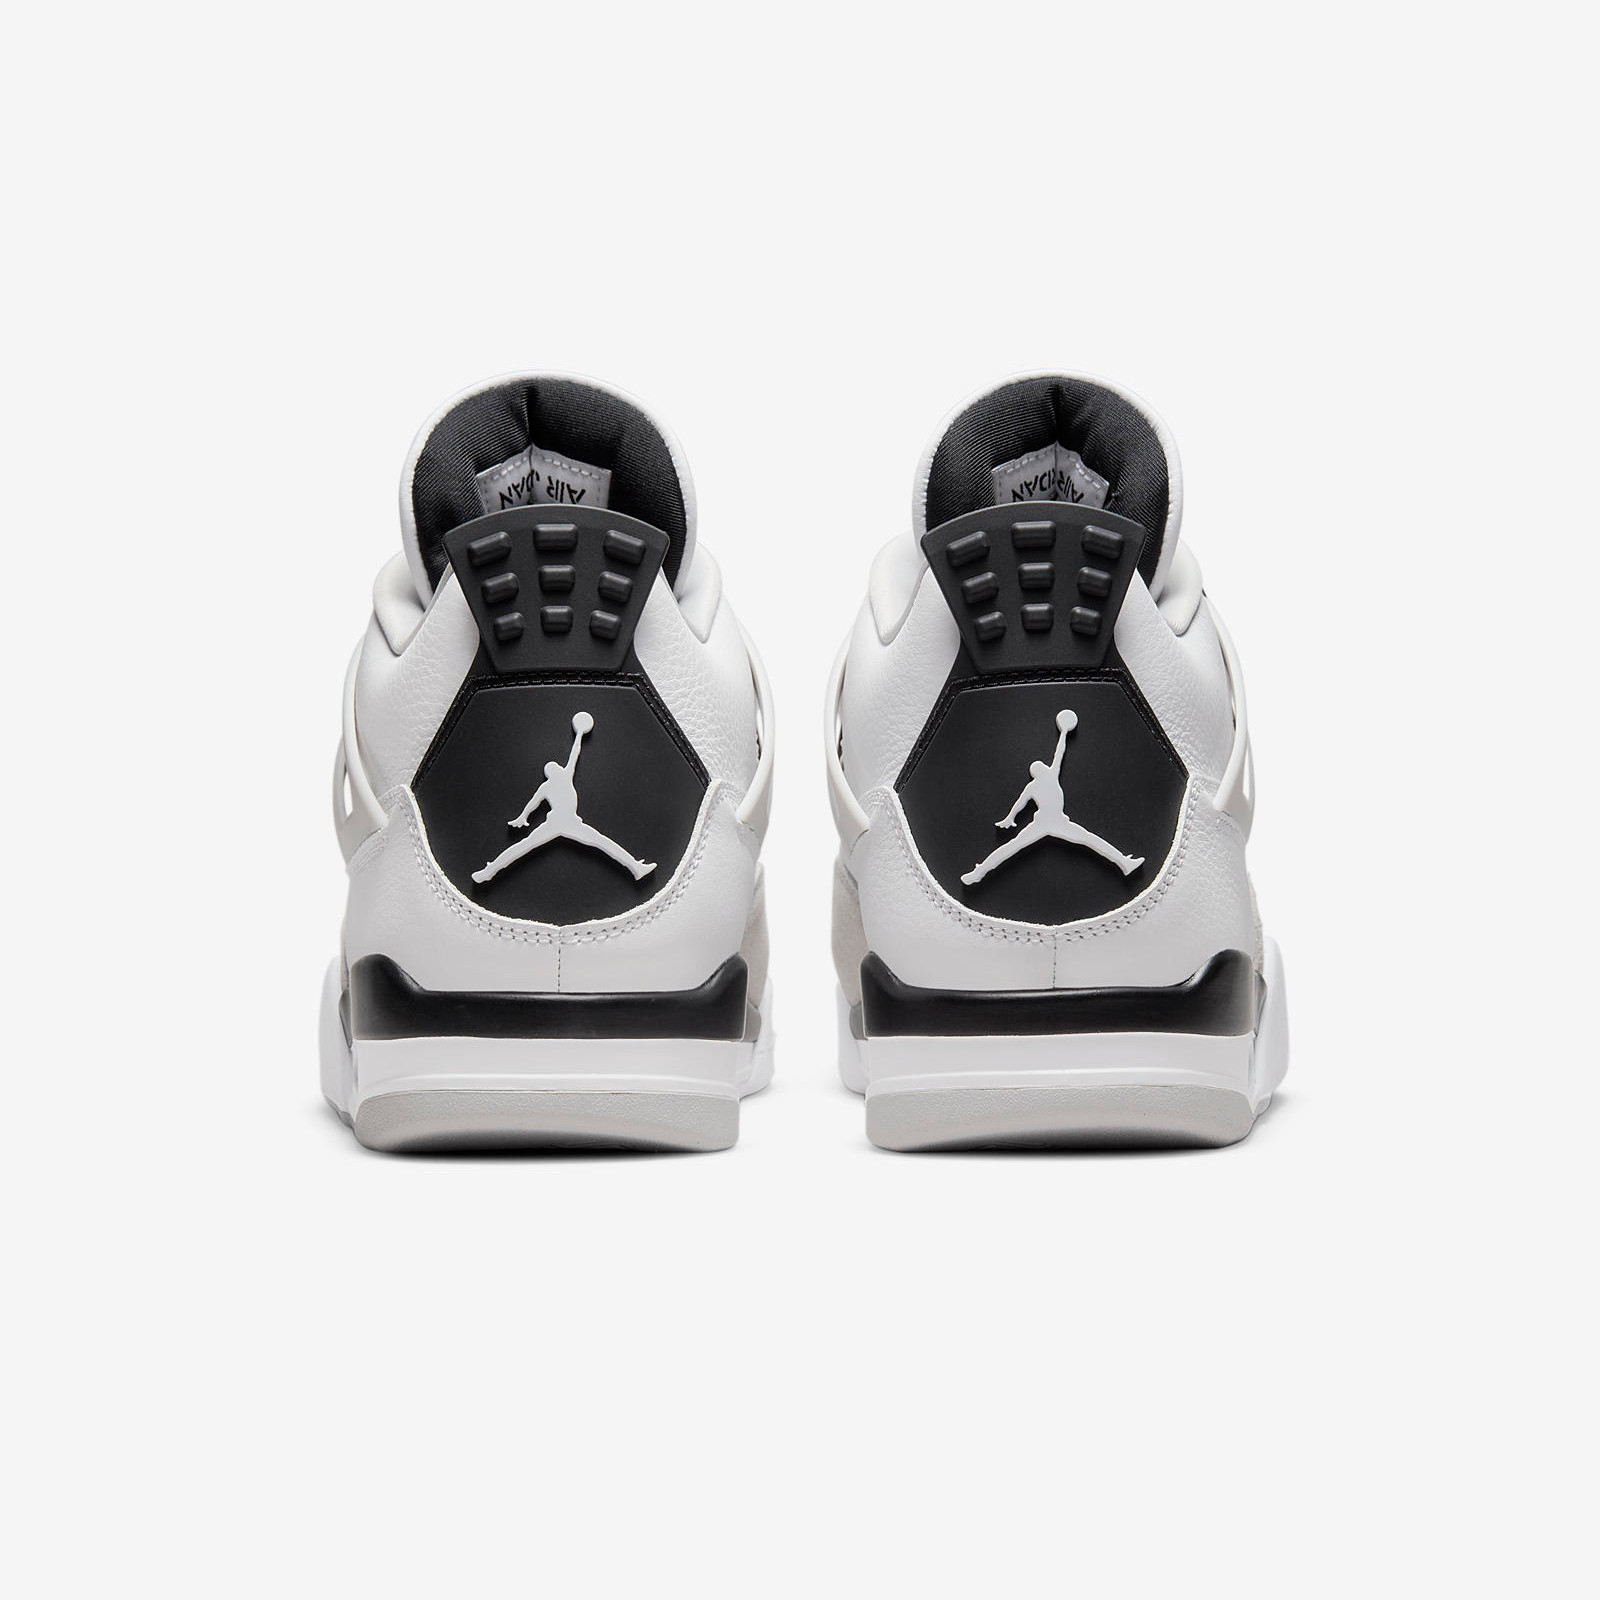 Air Jordan 4 Retro
Black / White